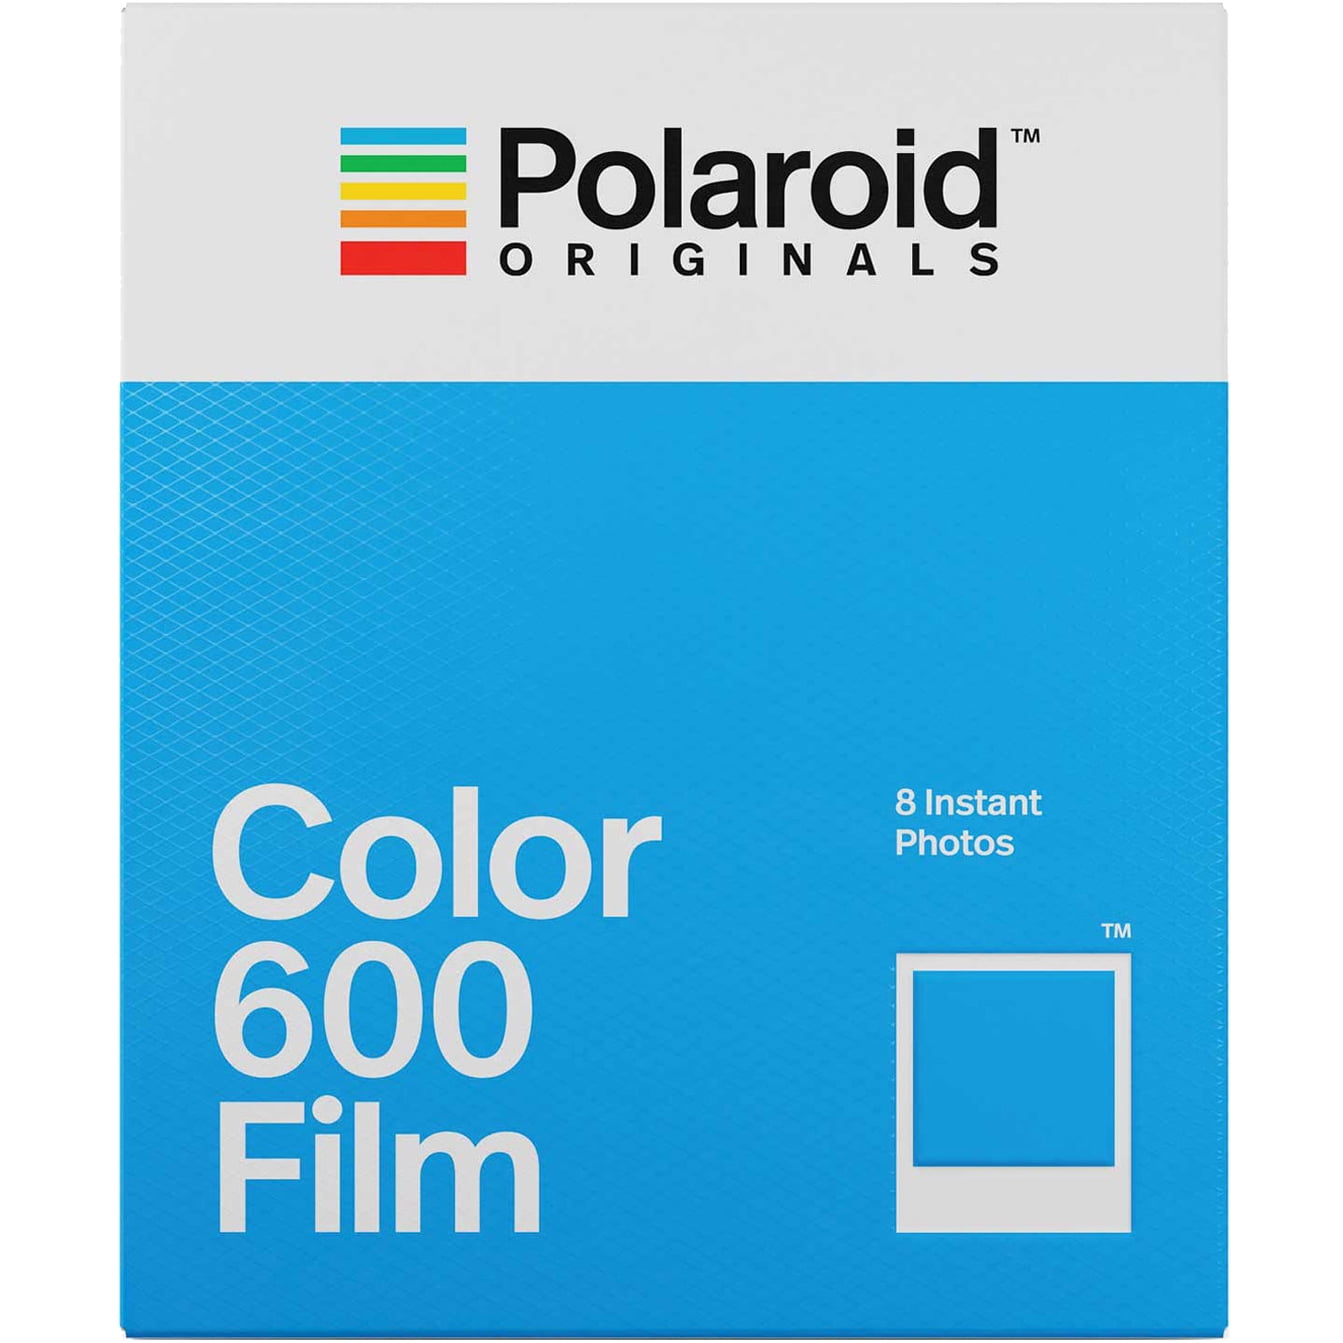 Snoep compressie Wreed Polaroid Originals Color Film for 600 - Walmart.com